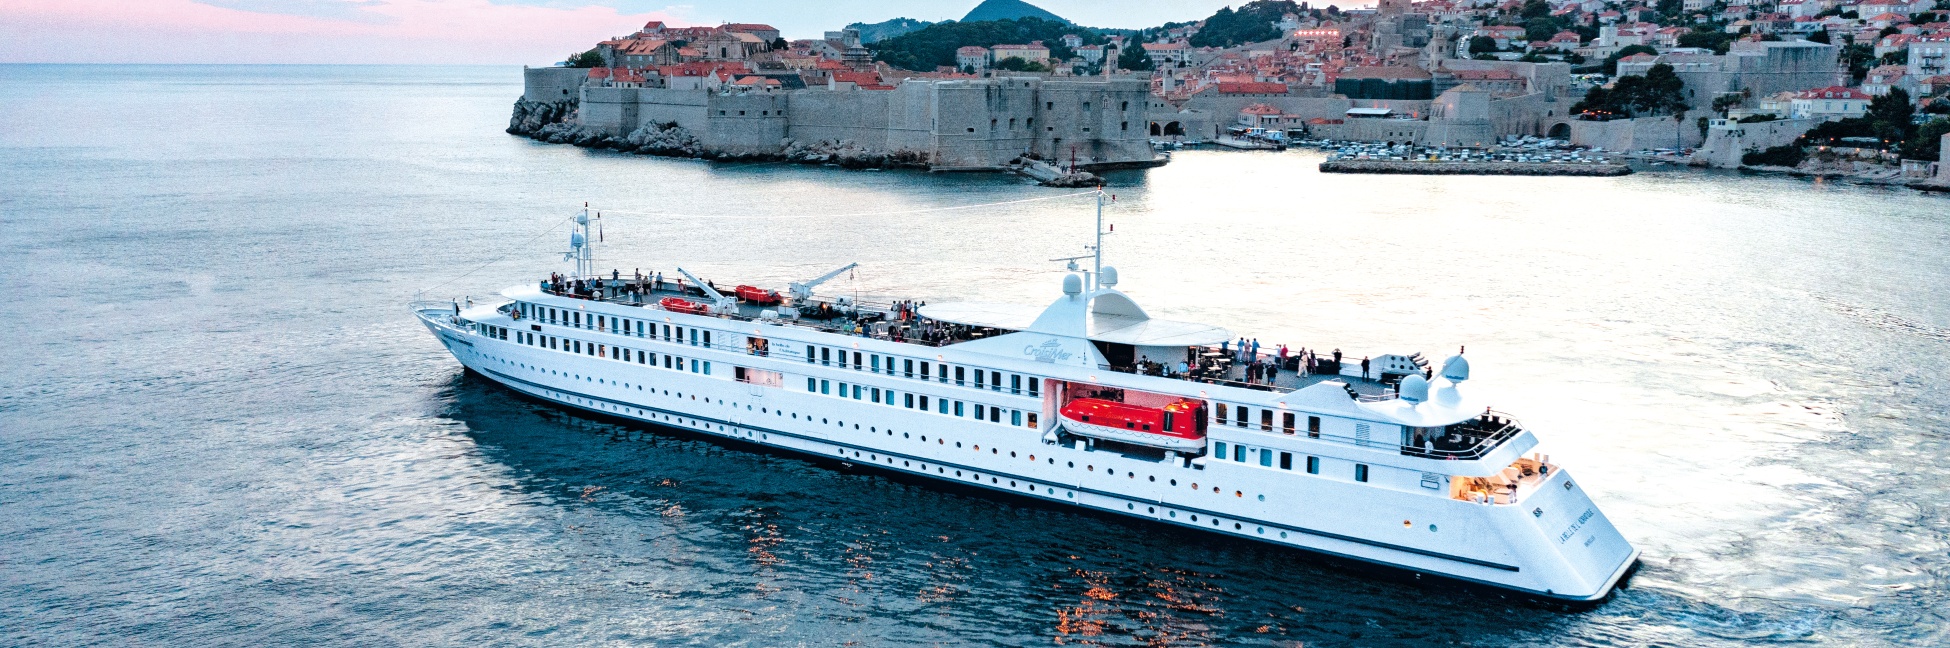 Imágenes del barco MV La Belle de L'adriatique